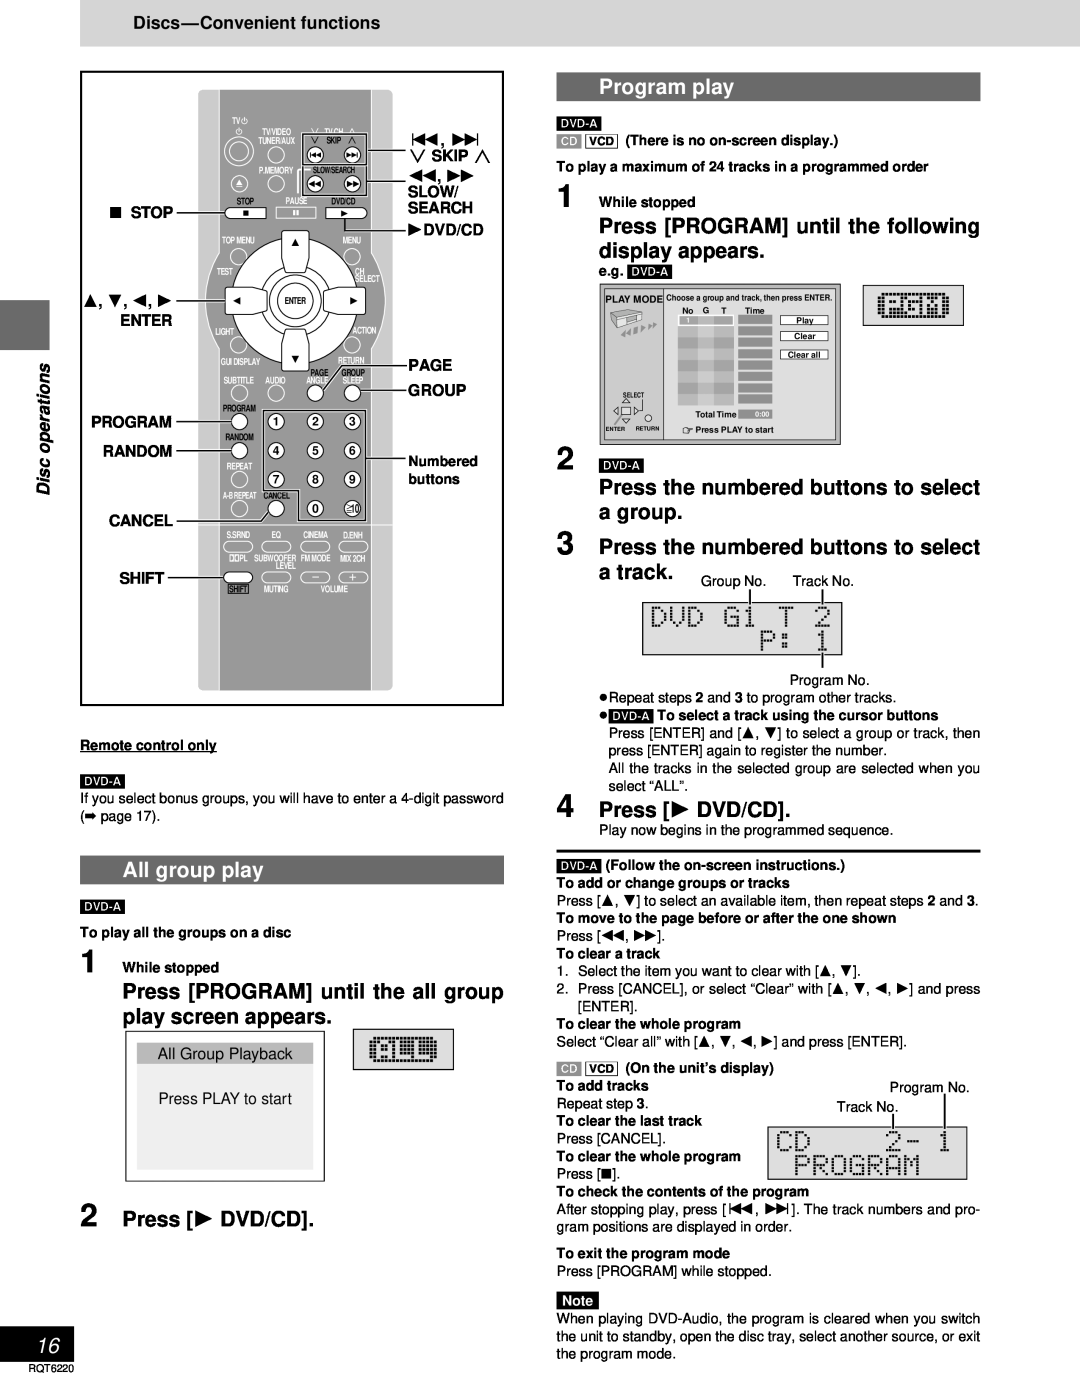 Panasonic SC-DM3 Program play, Press PROGRAM until the following display appears, All group play, Press 1 DVD/CD, Disc 